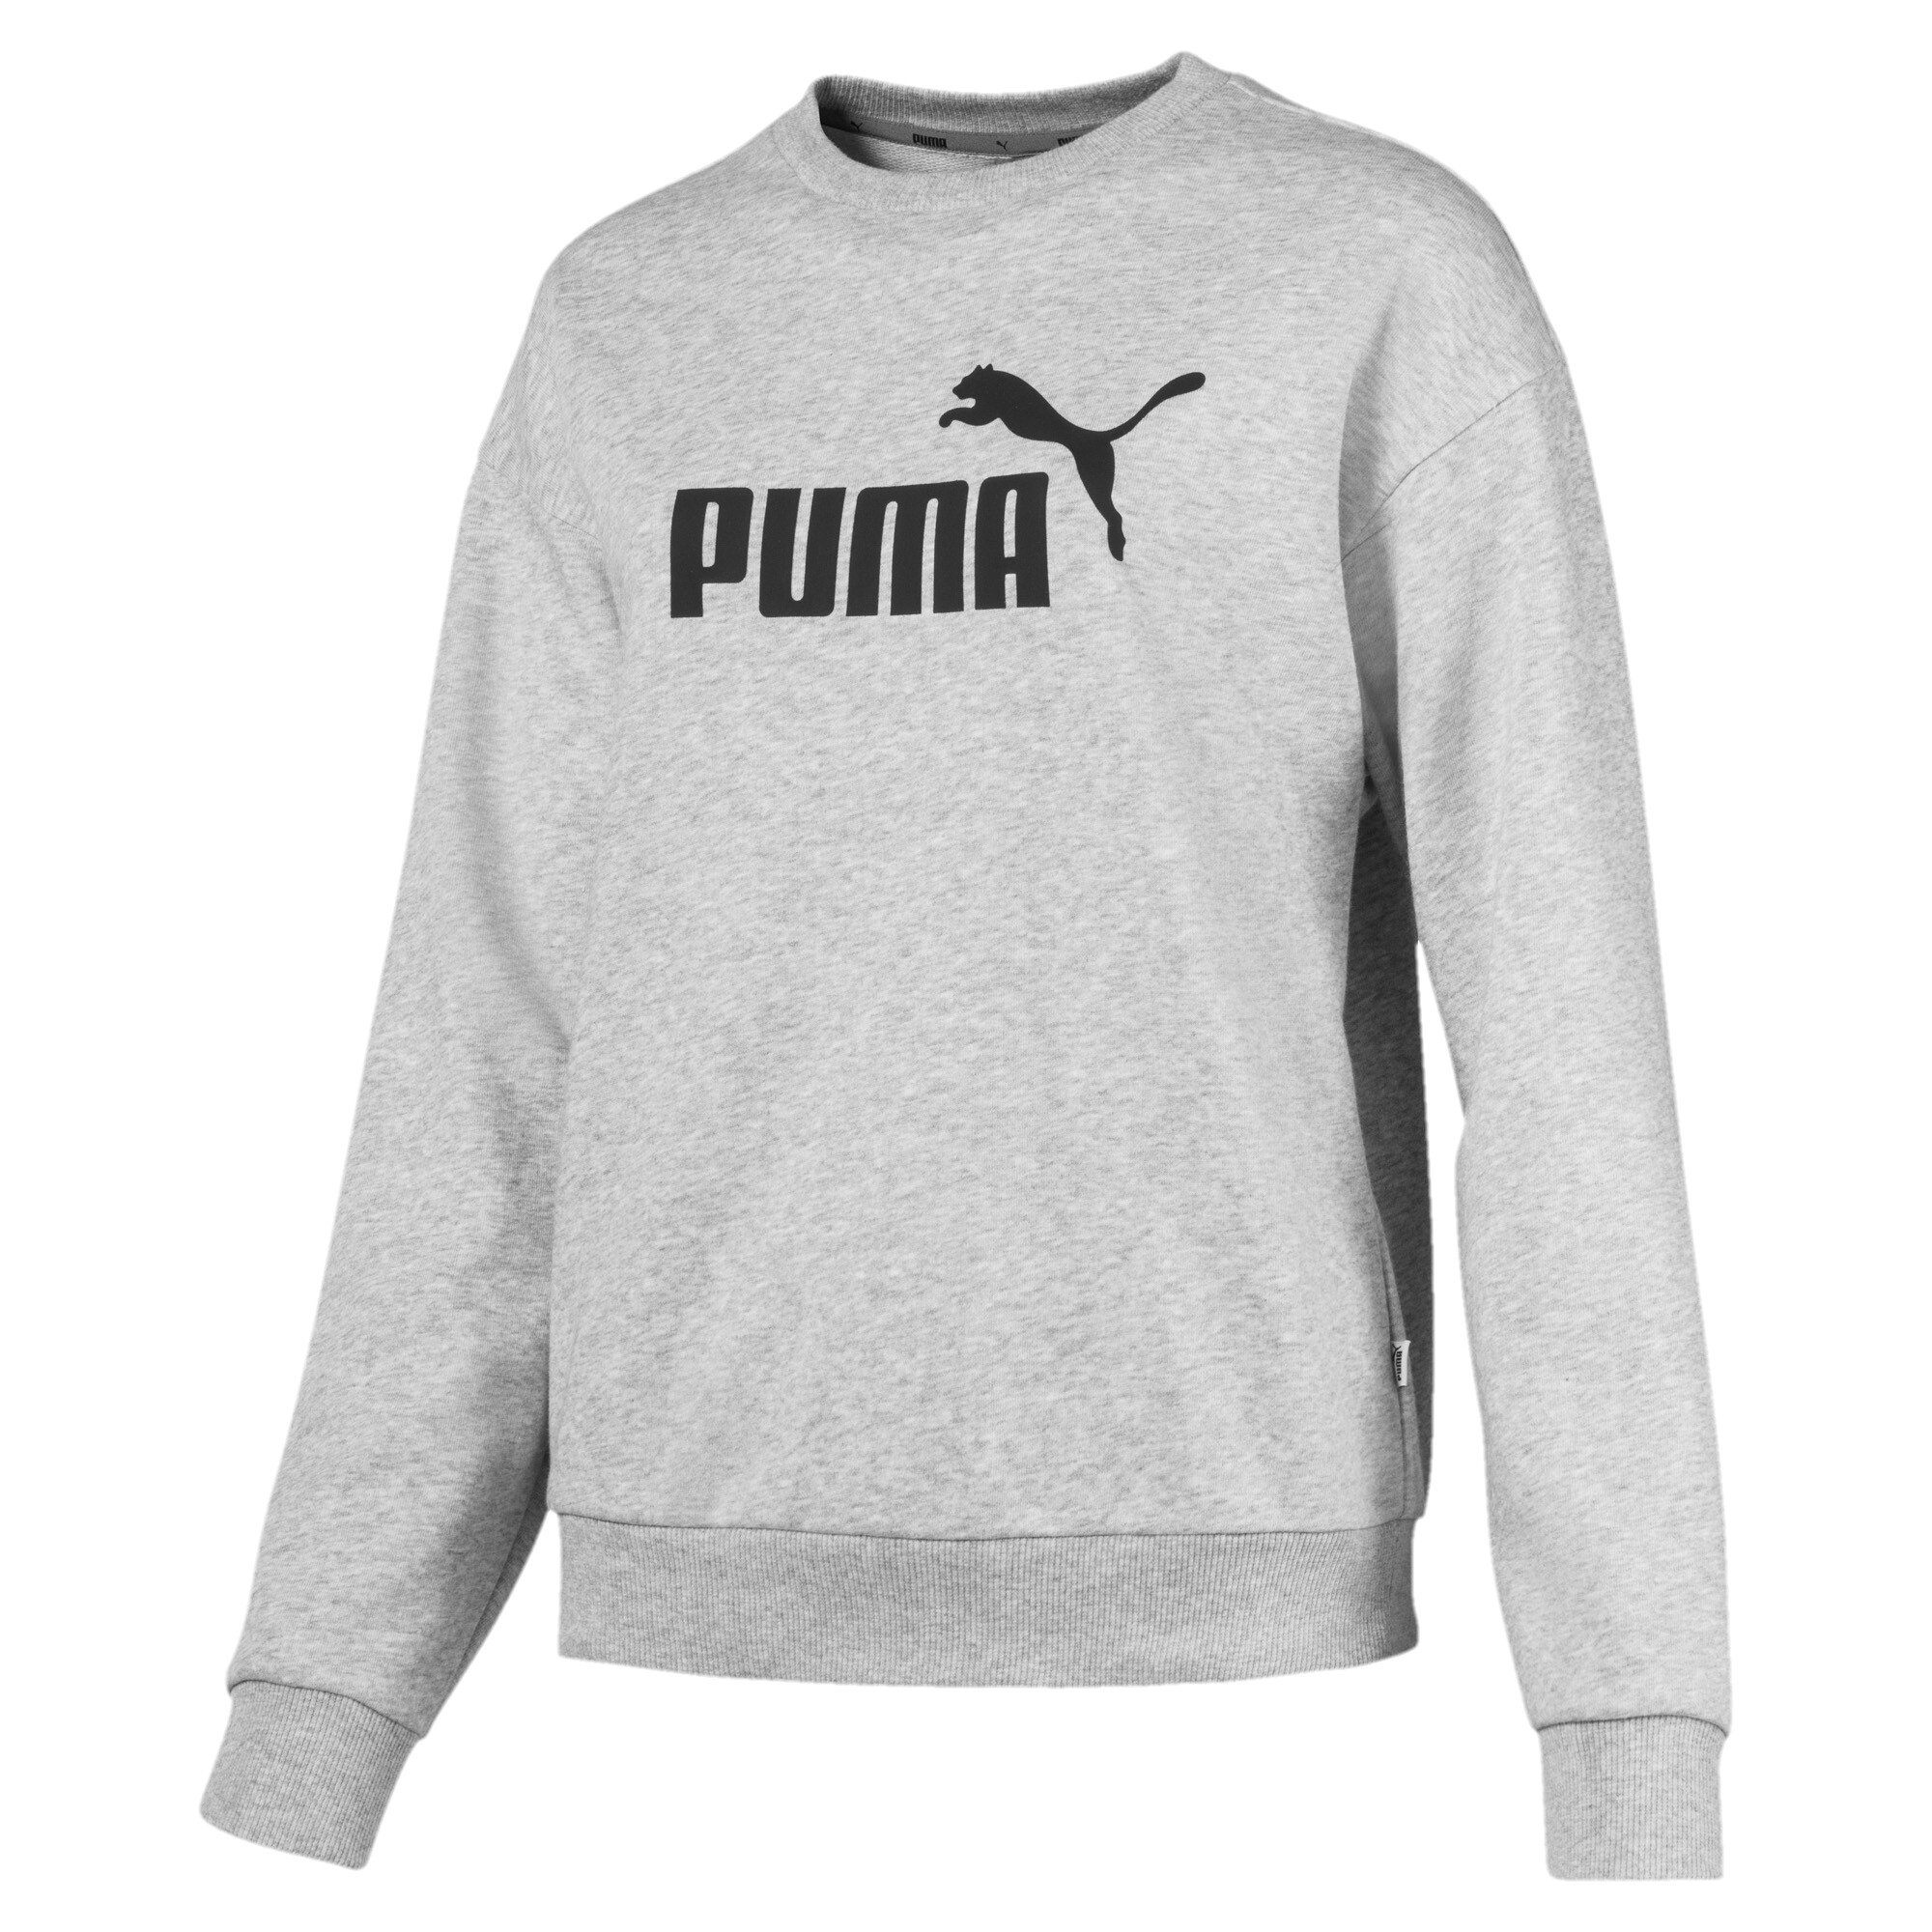 puma sweaters for ladies